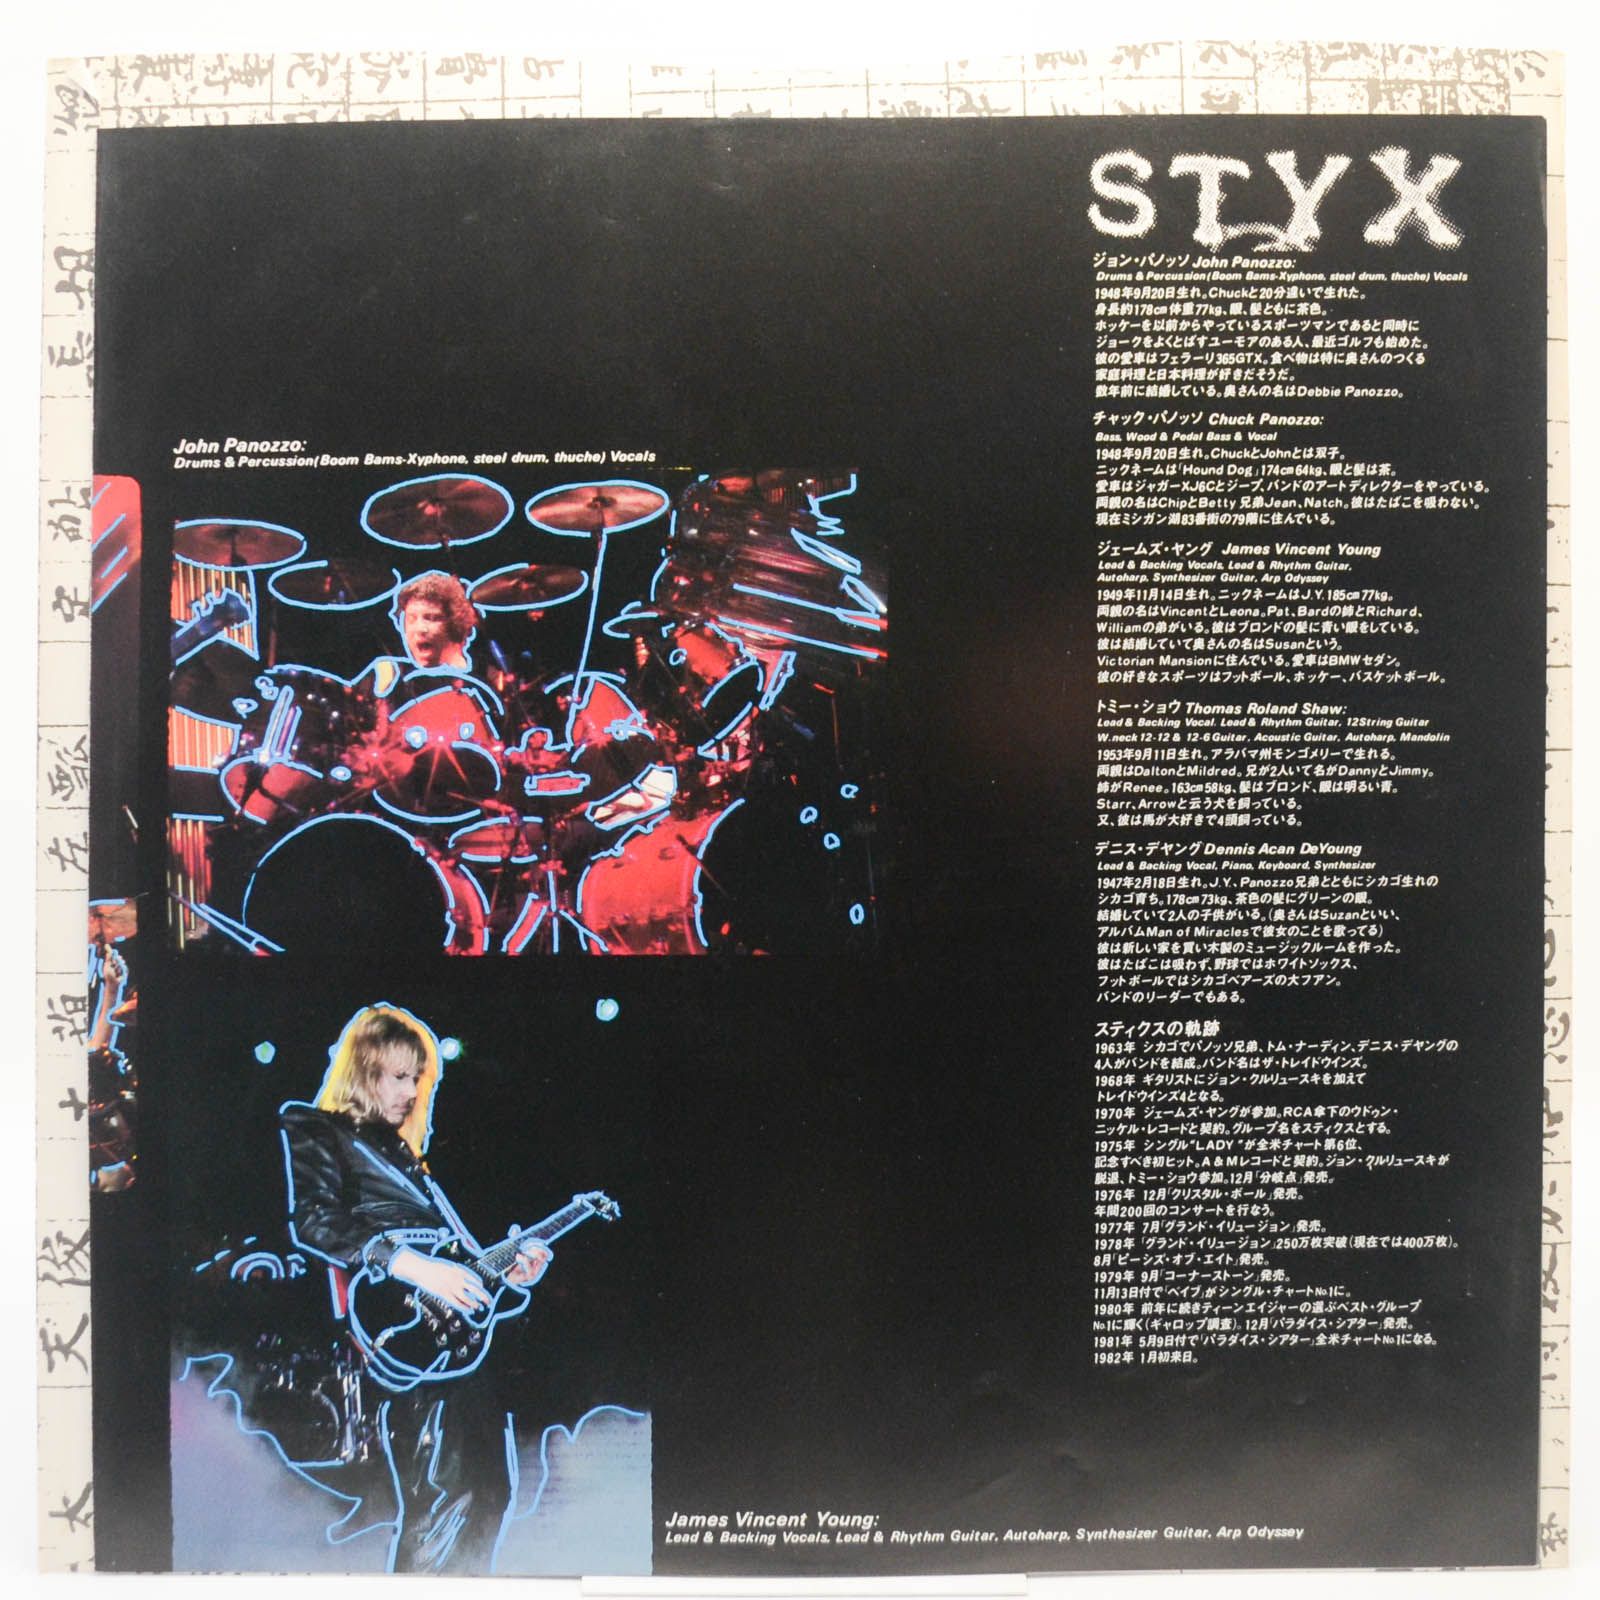 Styx — Reppoo, 1981